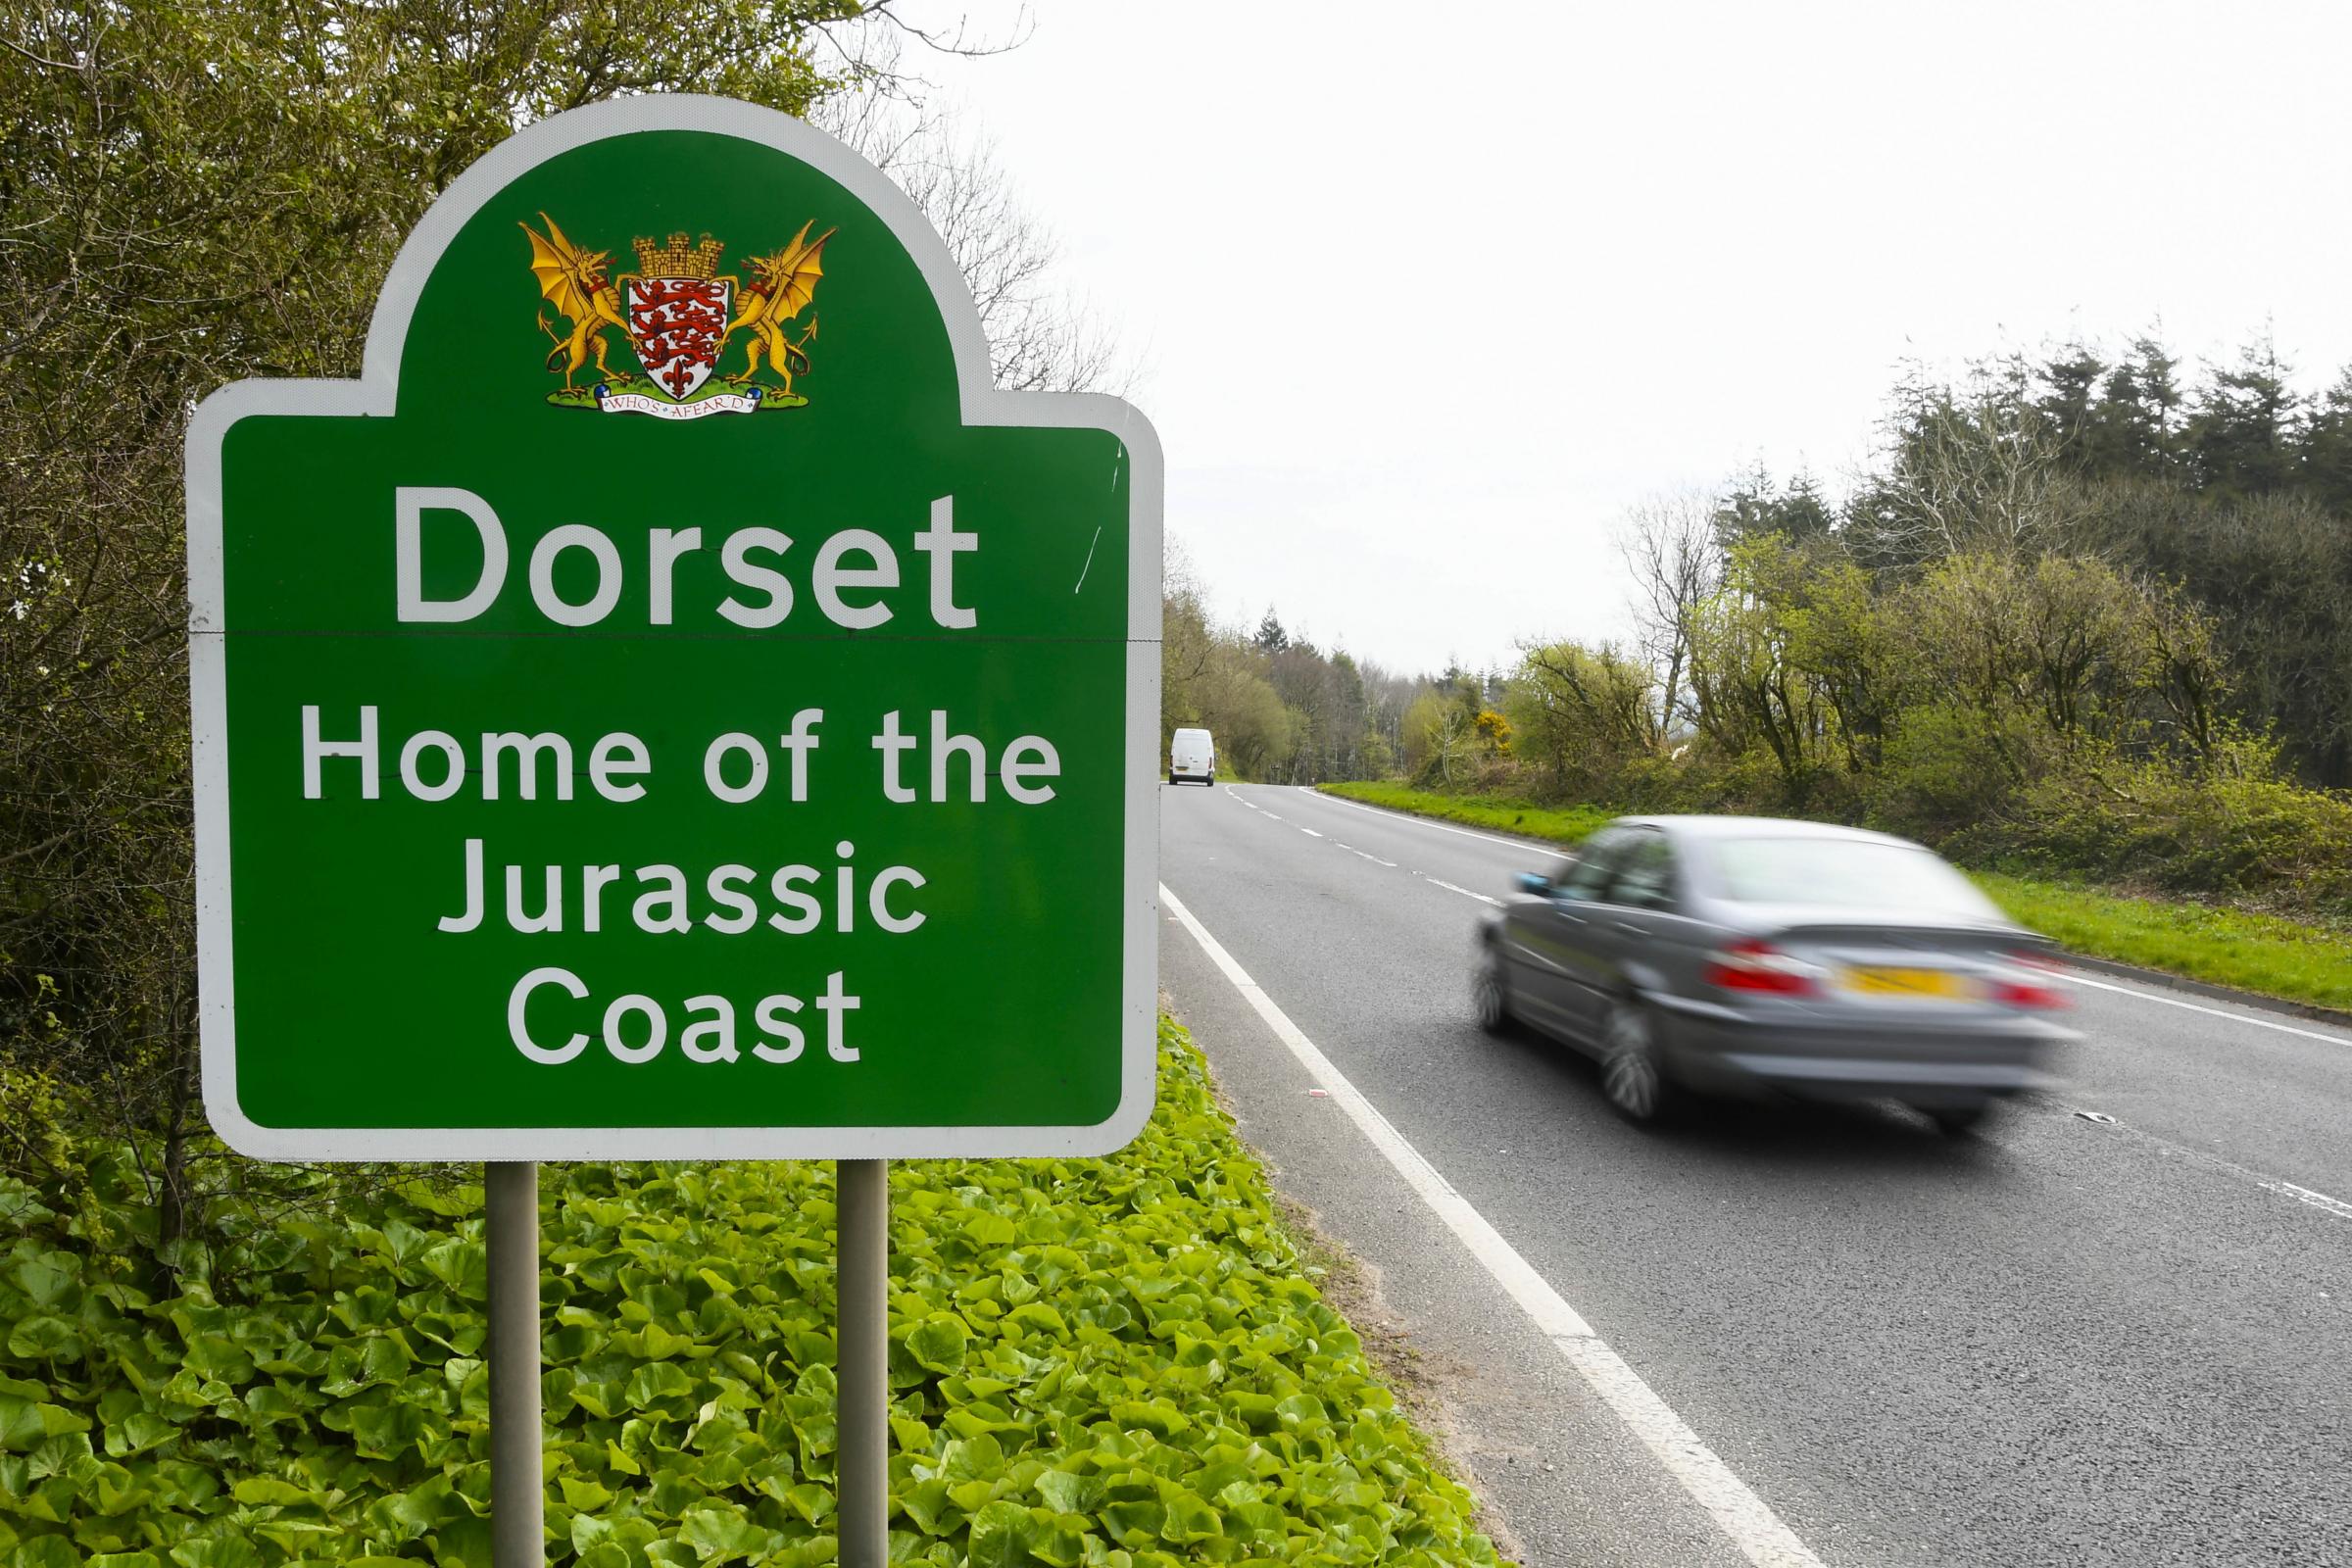 Dorset - Home of the Jurassic Coast